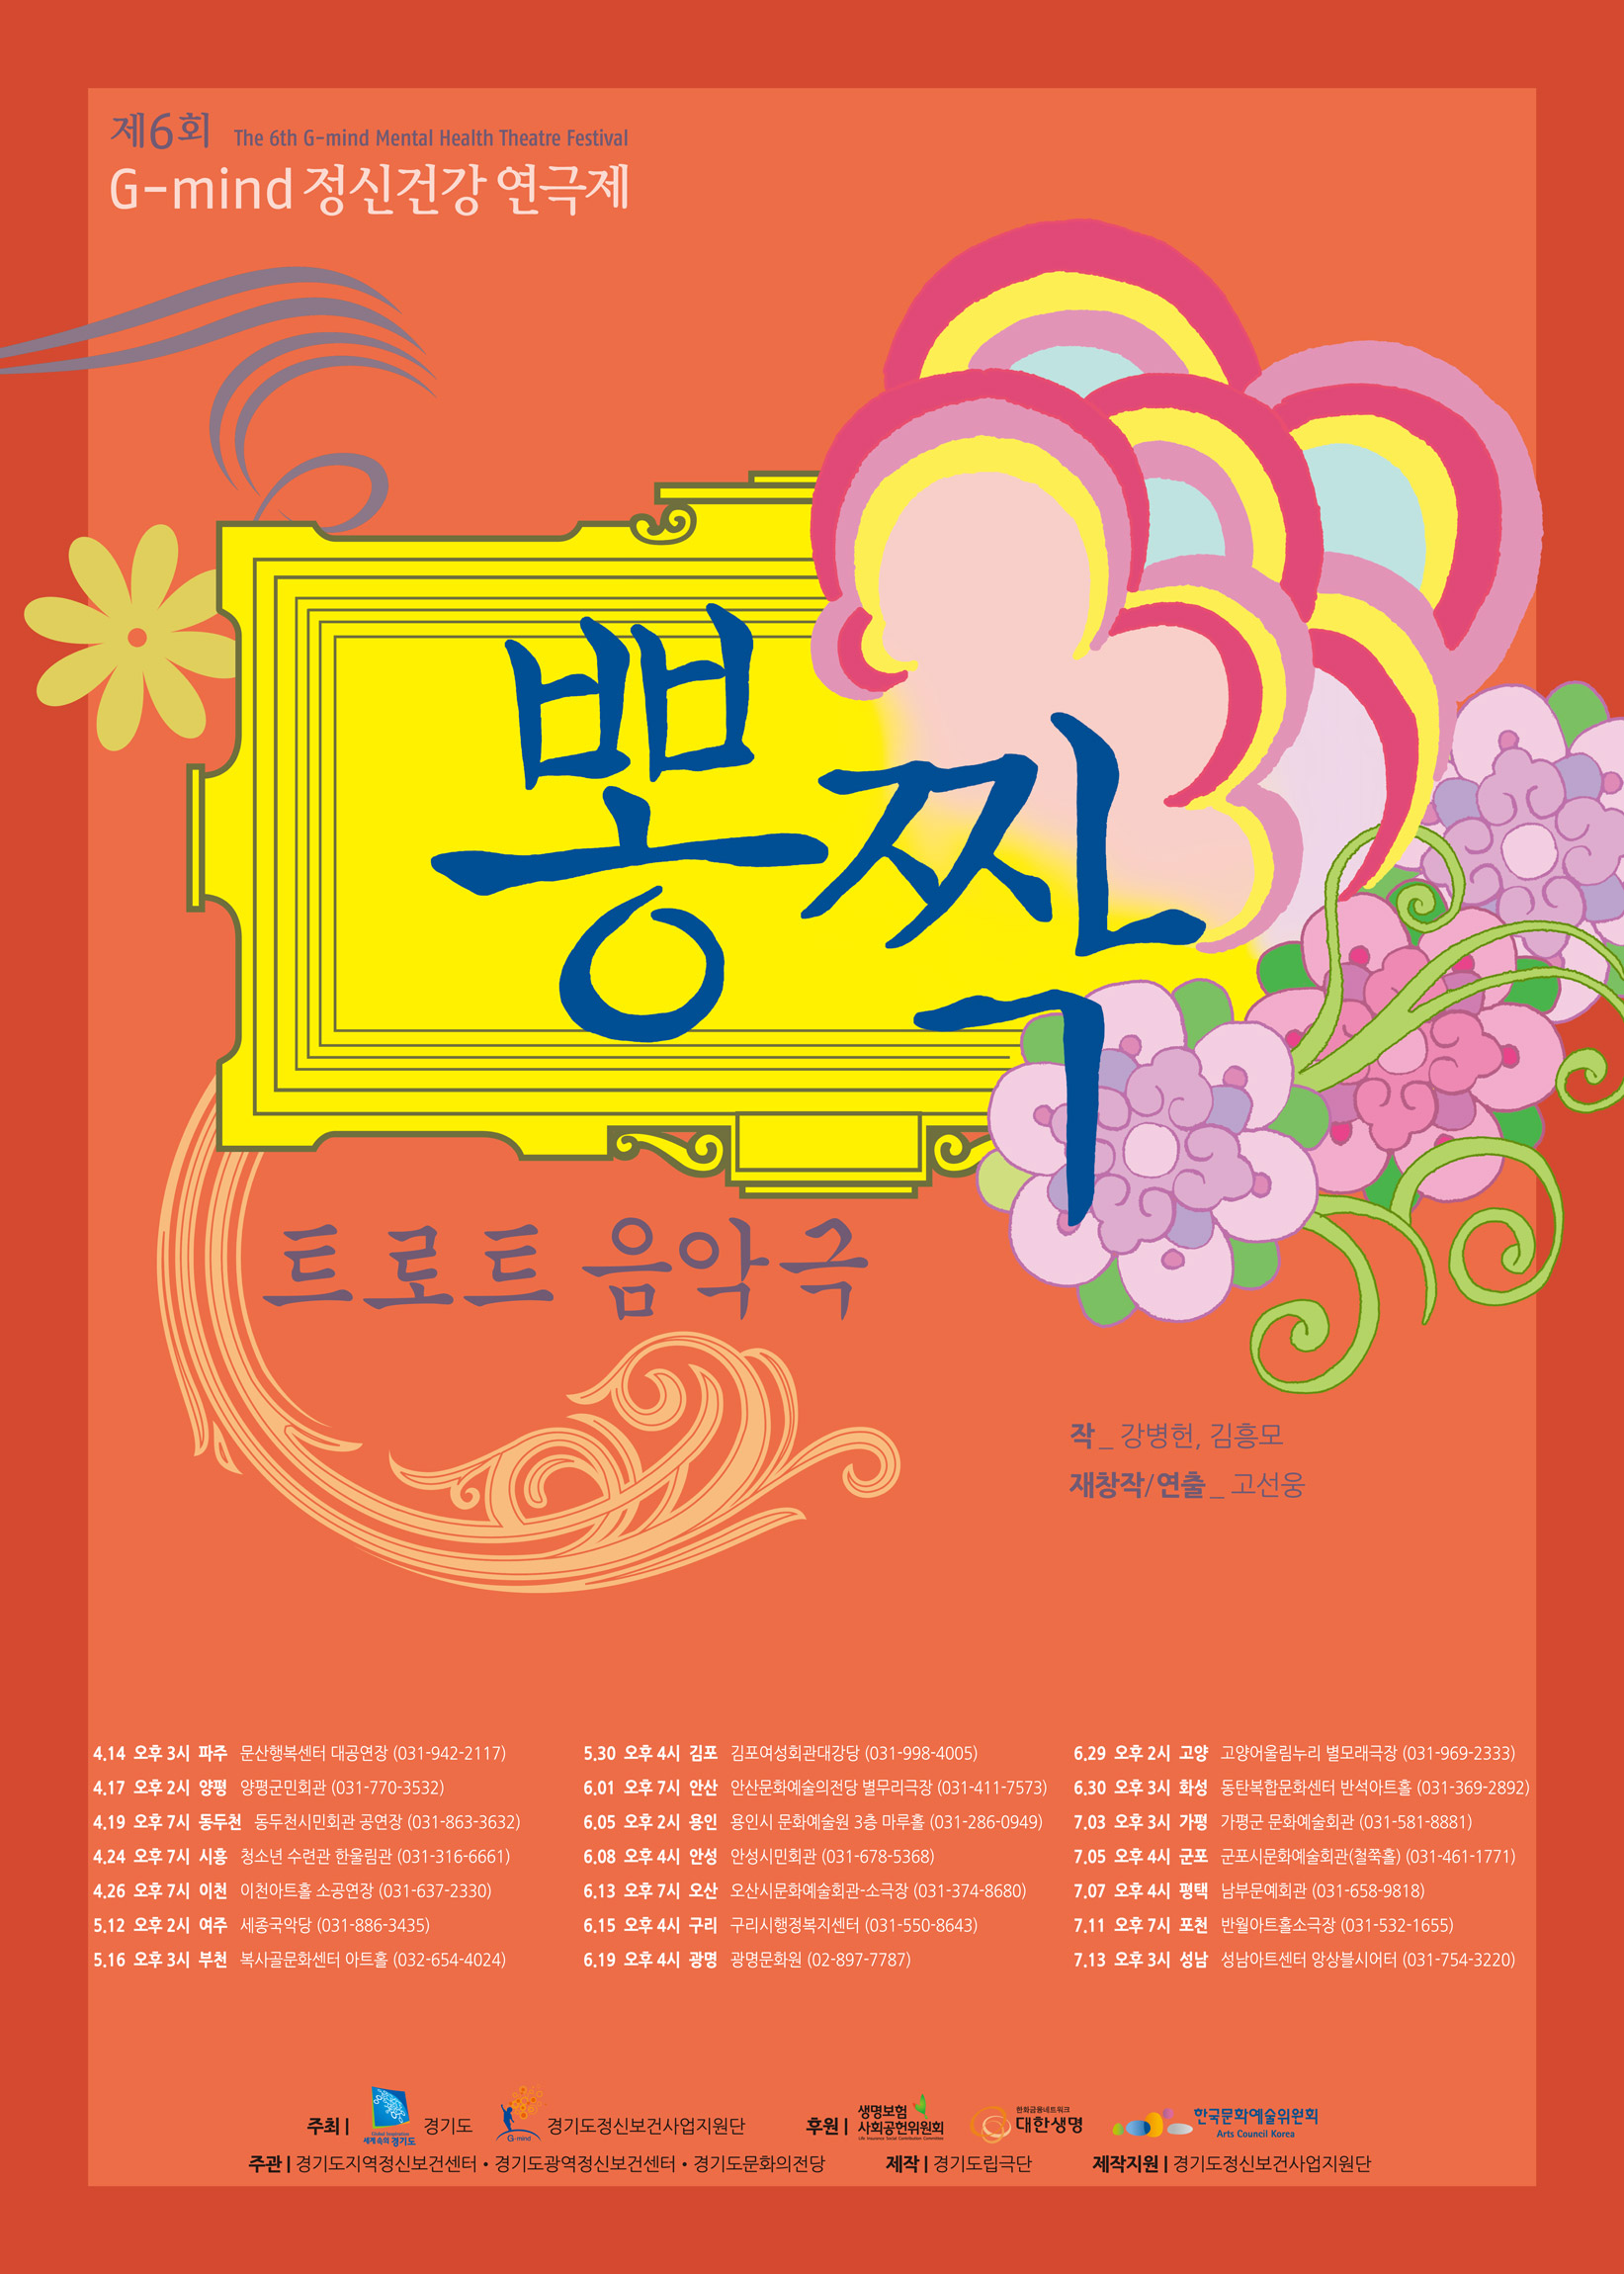 Gmind Theatre Festival 경기도정신보건센터 그래픽 gmind-theatre-poster.jpg